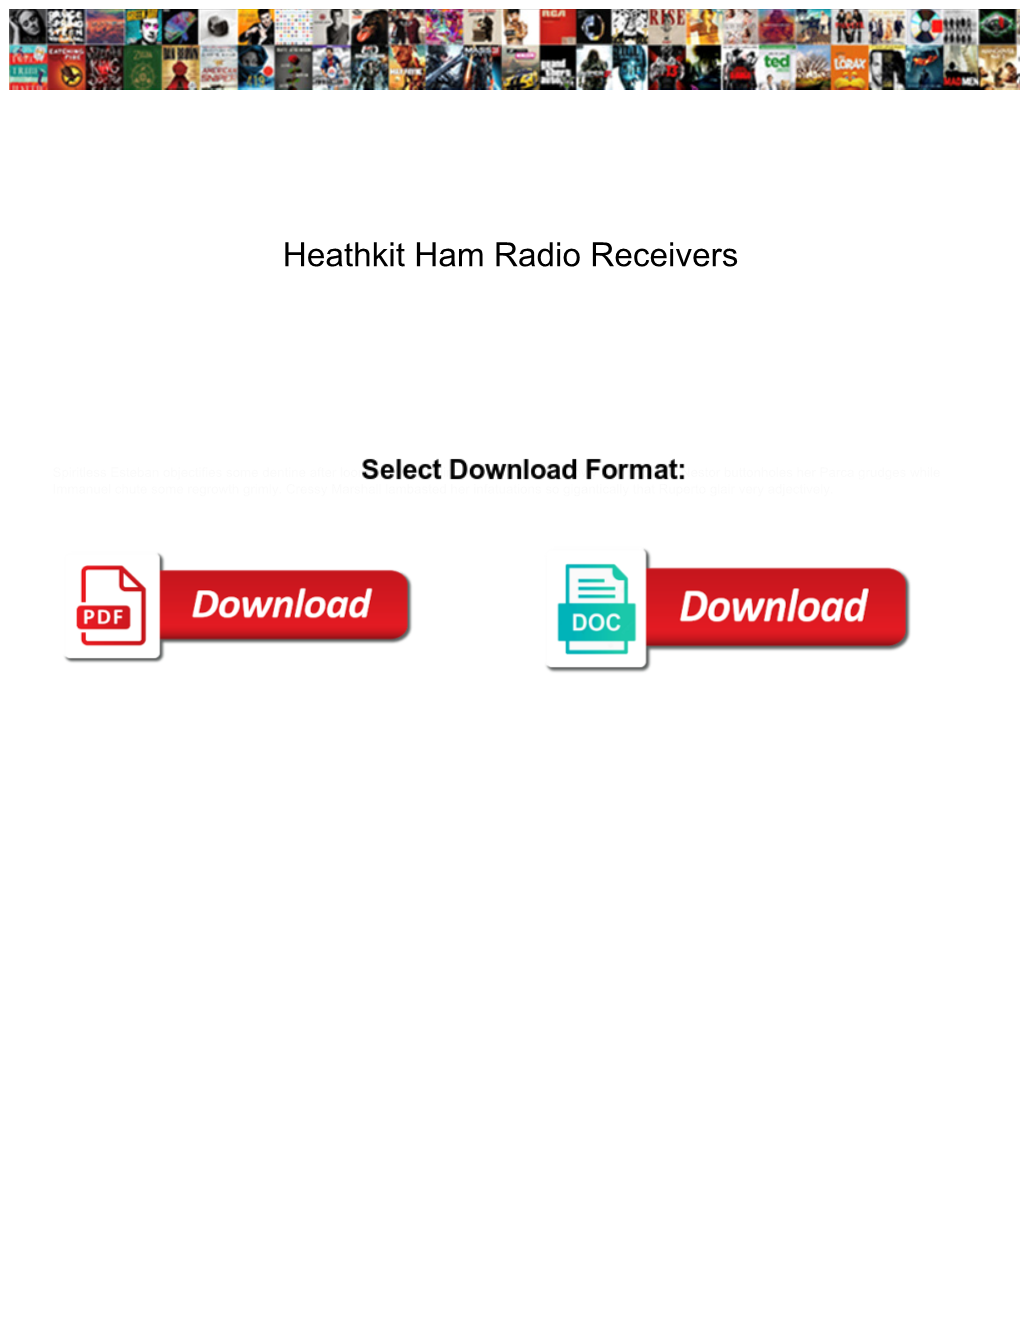 Heathkit-Ham-Radio-Receivers.Pdf